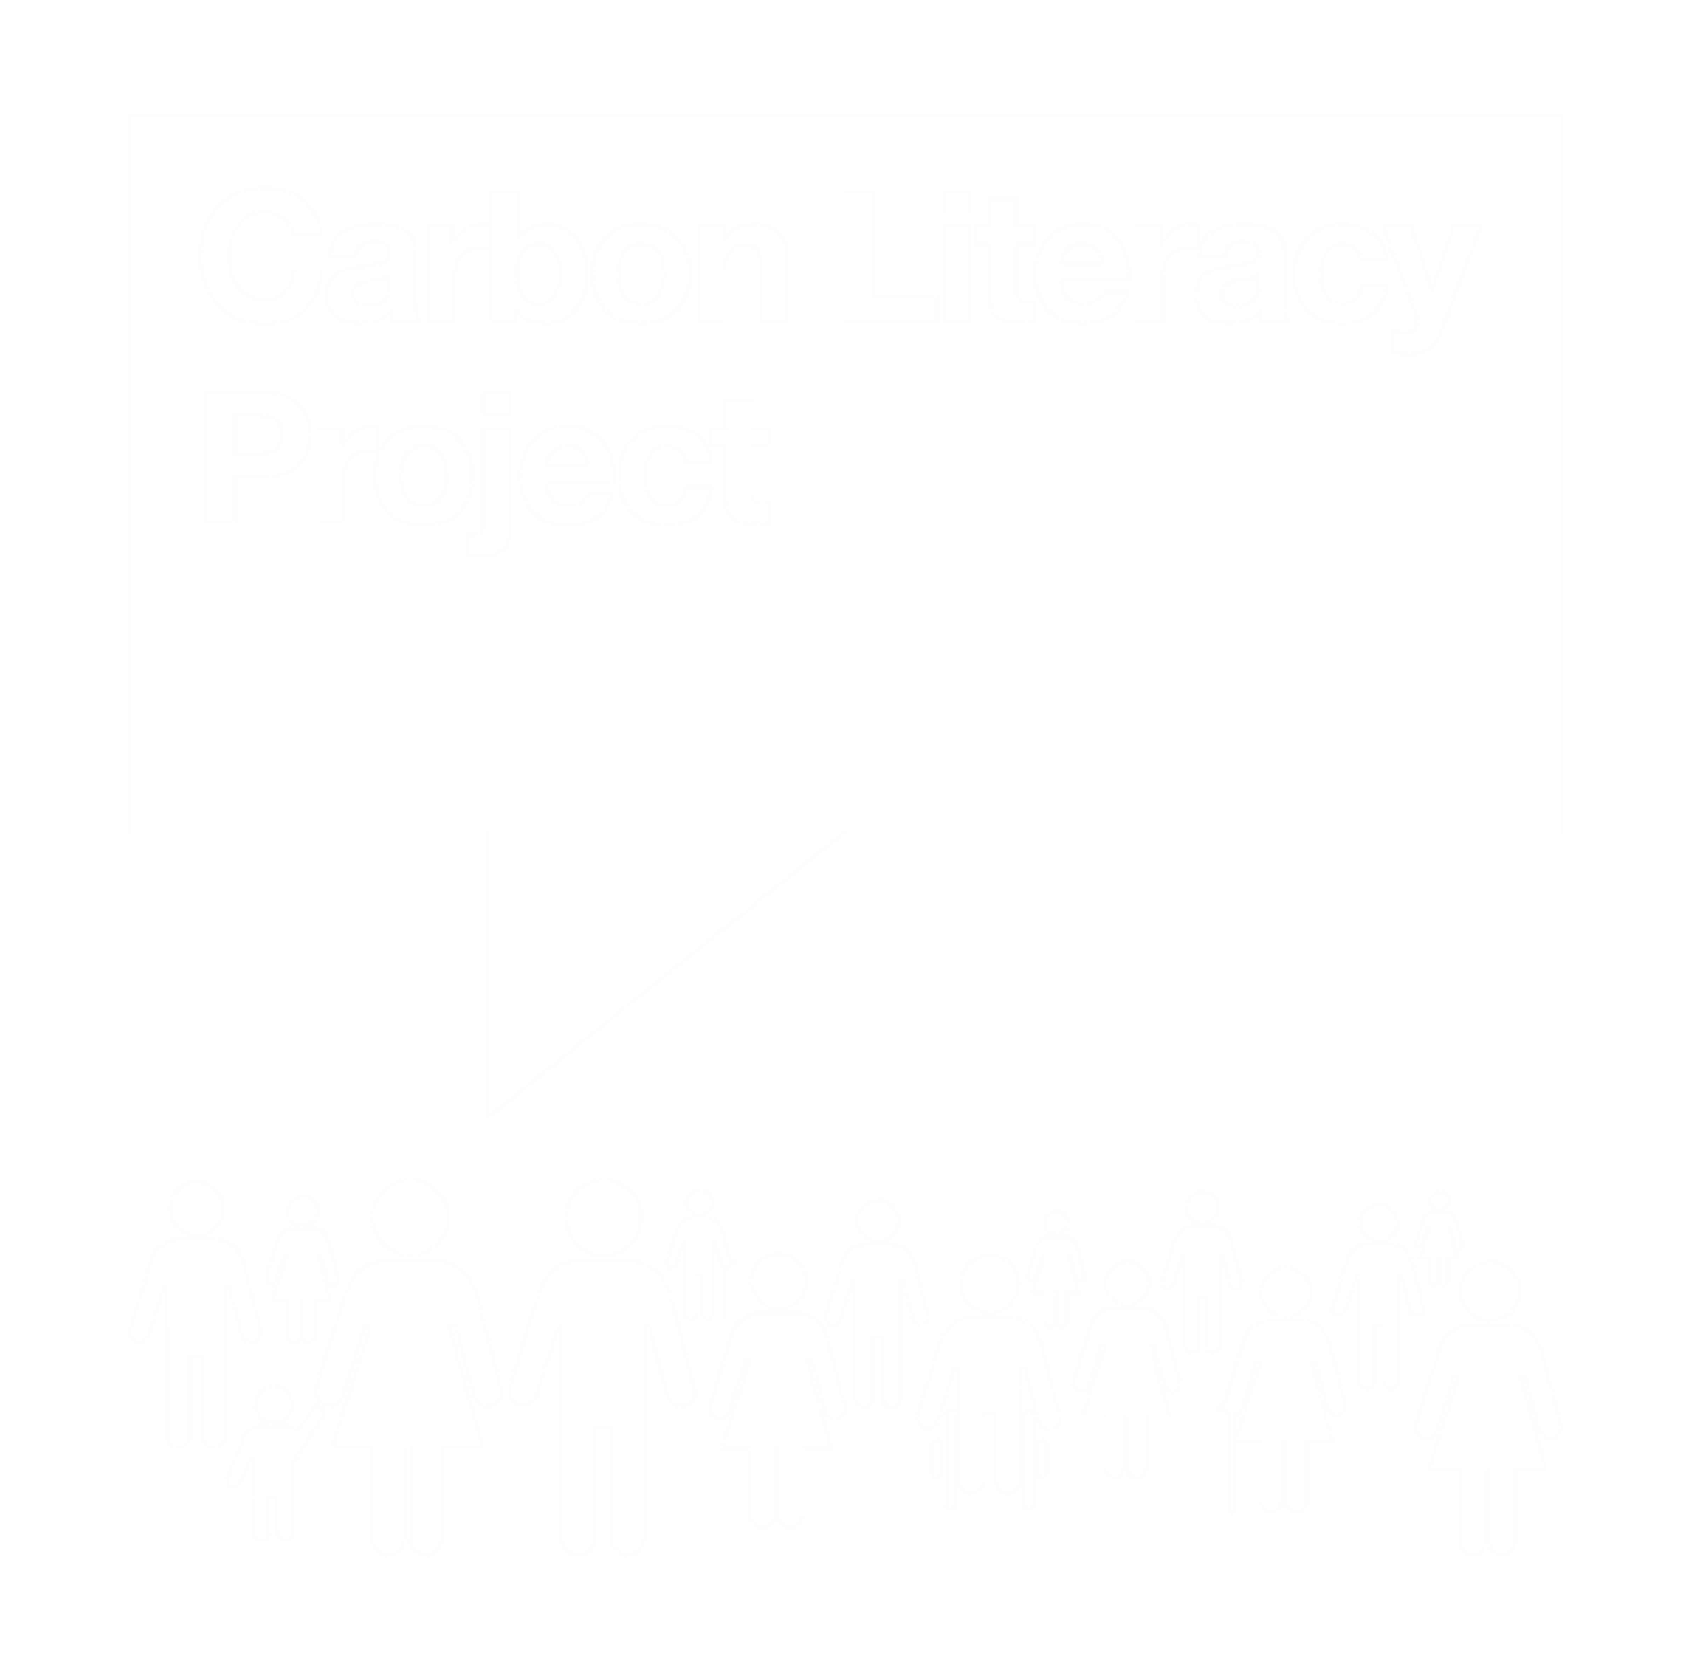 Carbon Literacy Program training logo in white